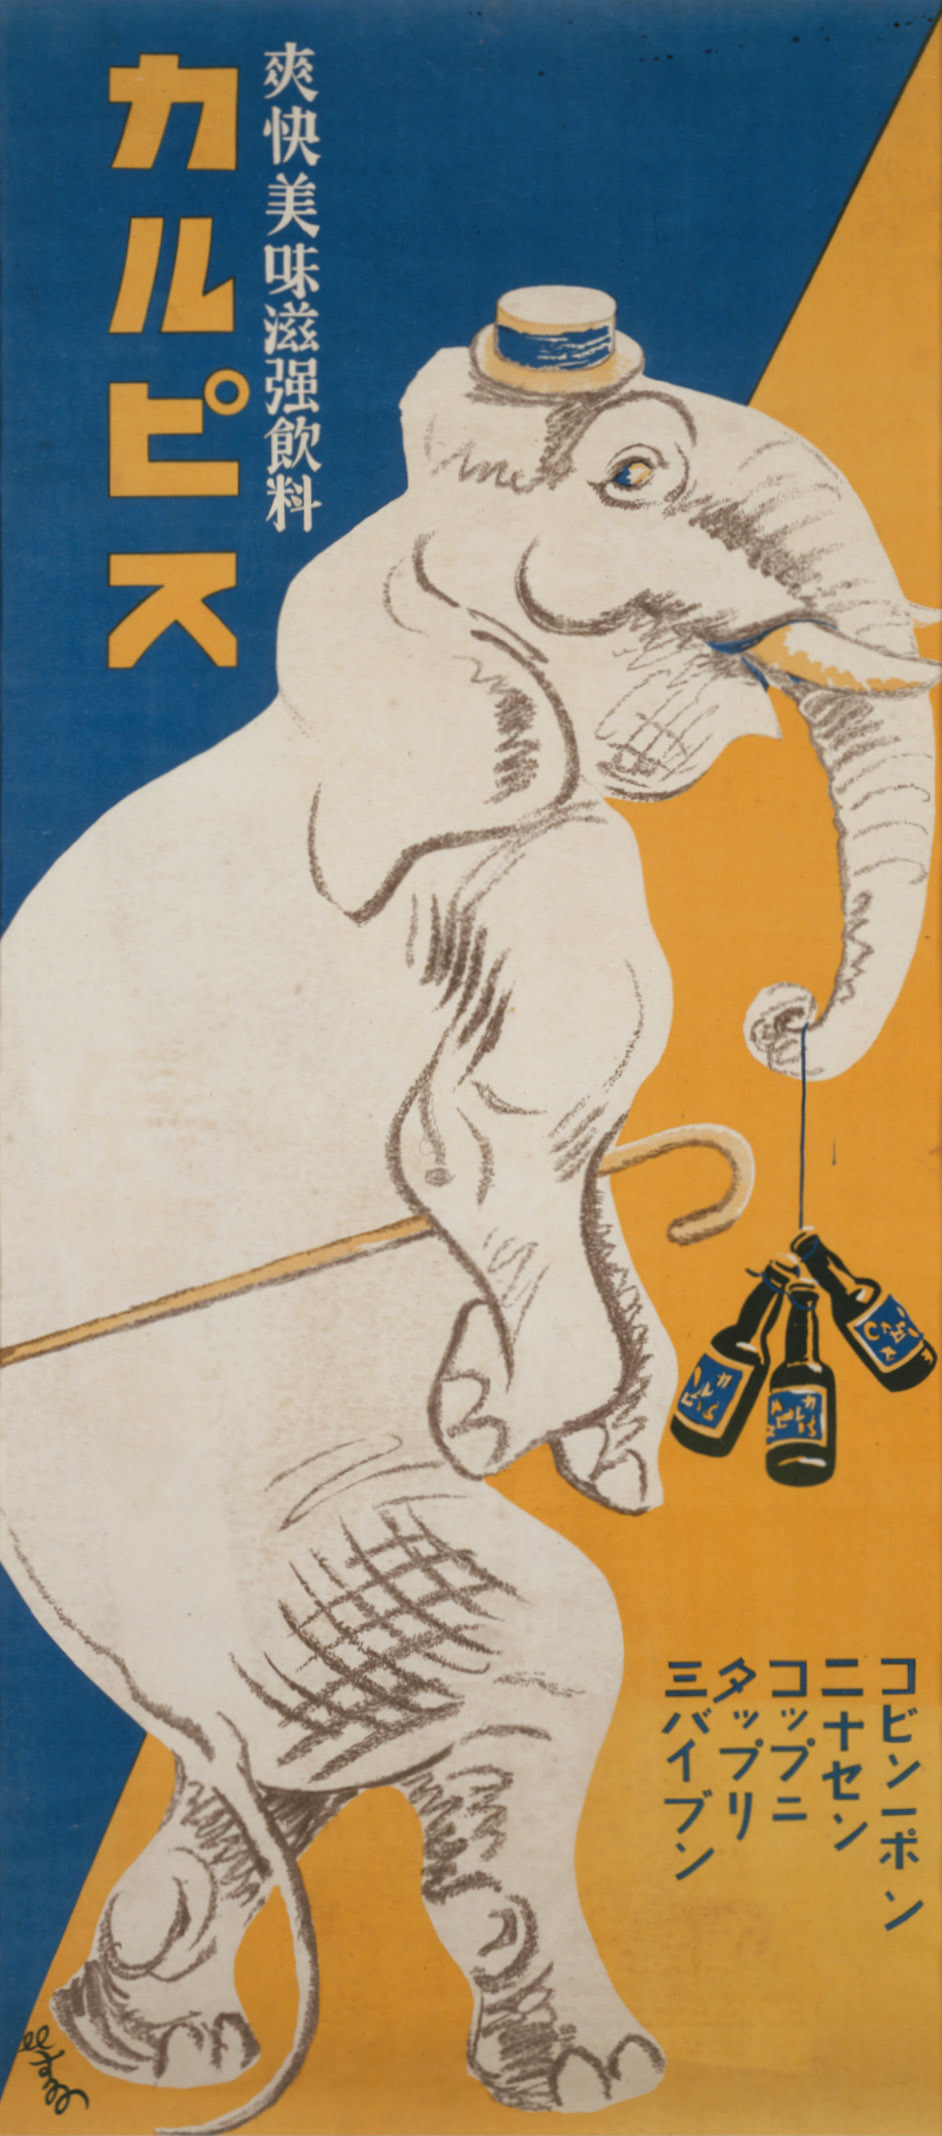 杉浦非水 《カルピス》 1926年 東京国立近代美術館蔵